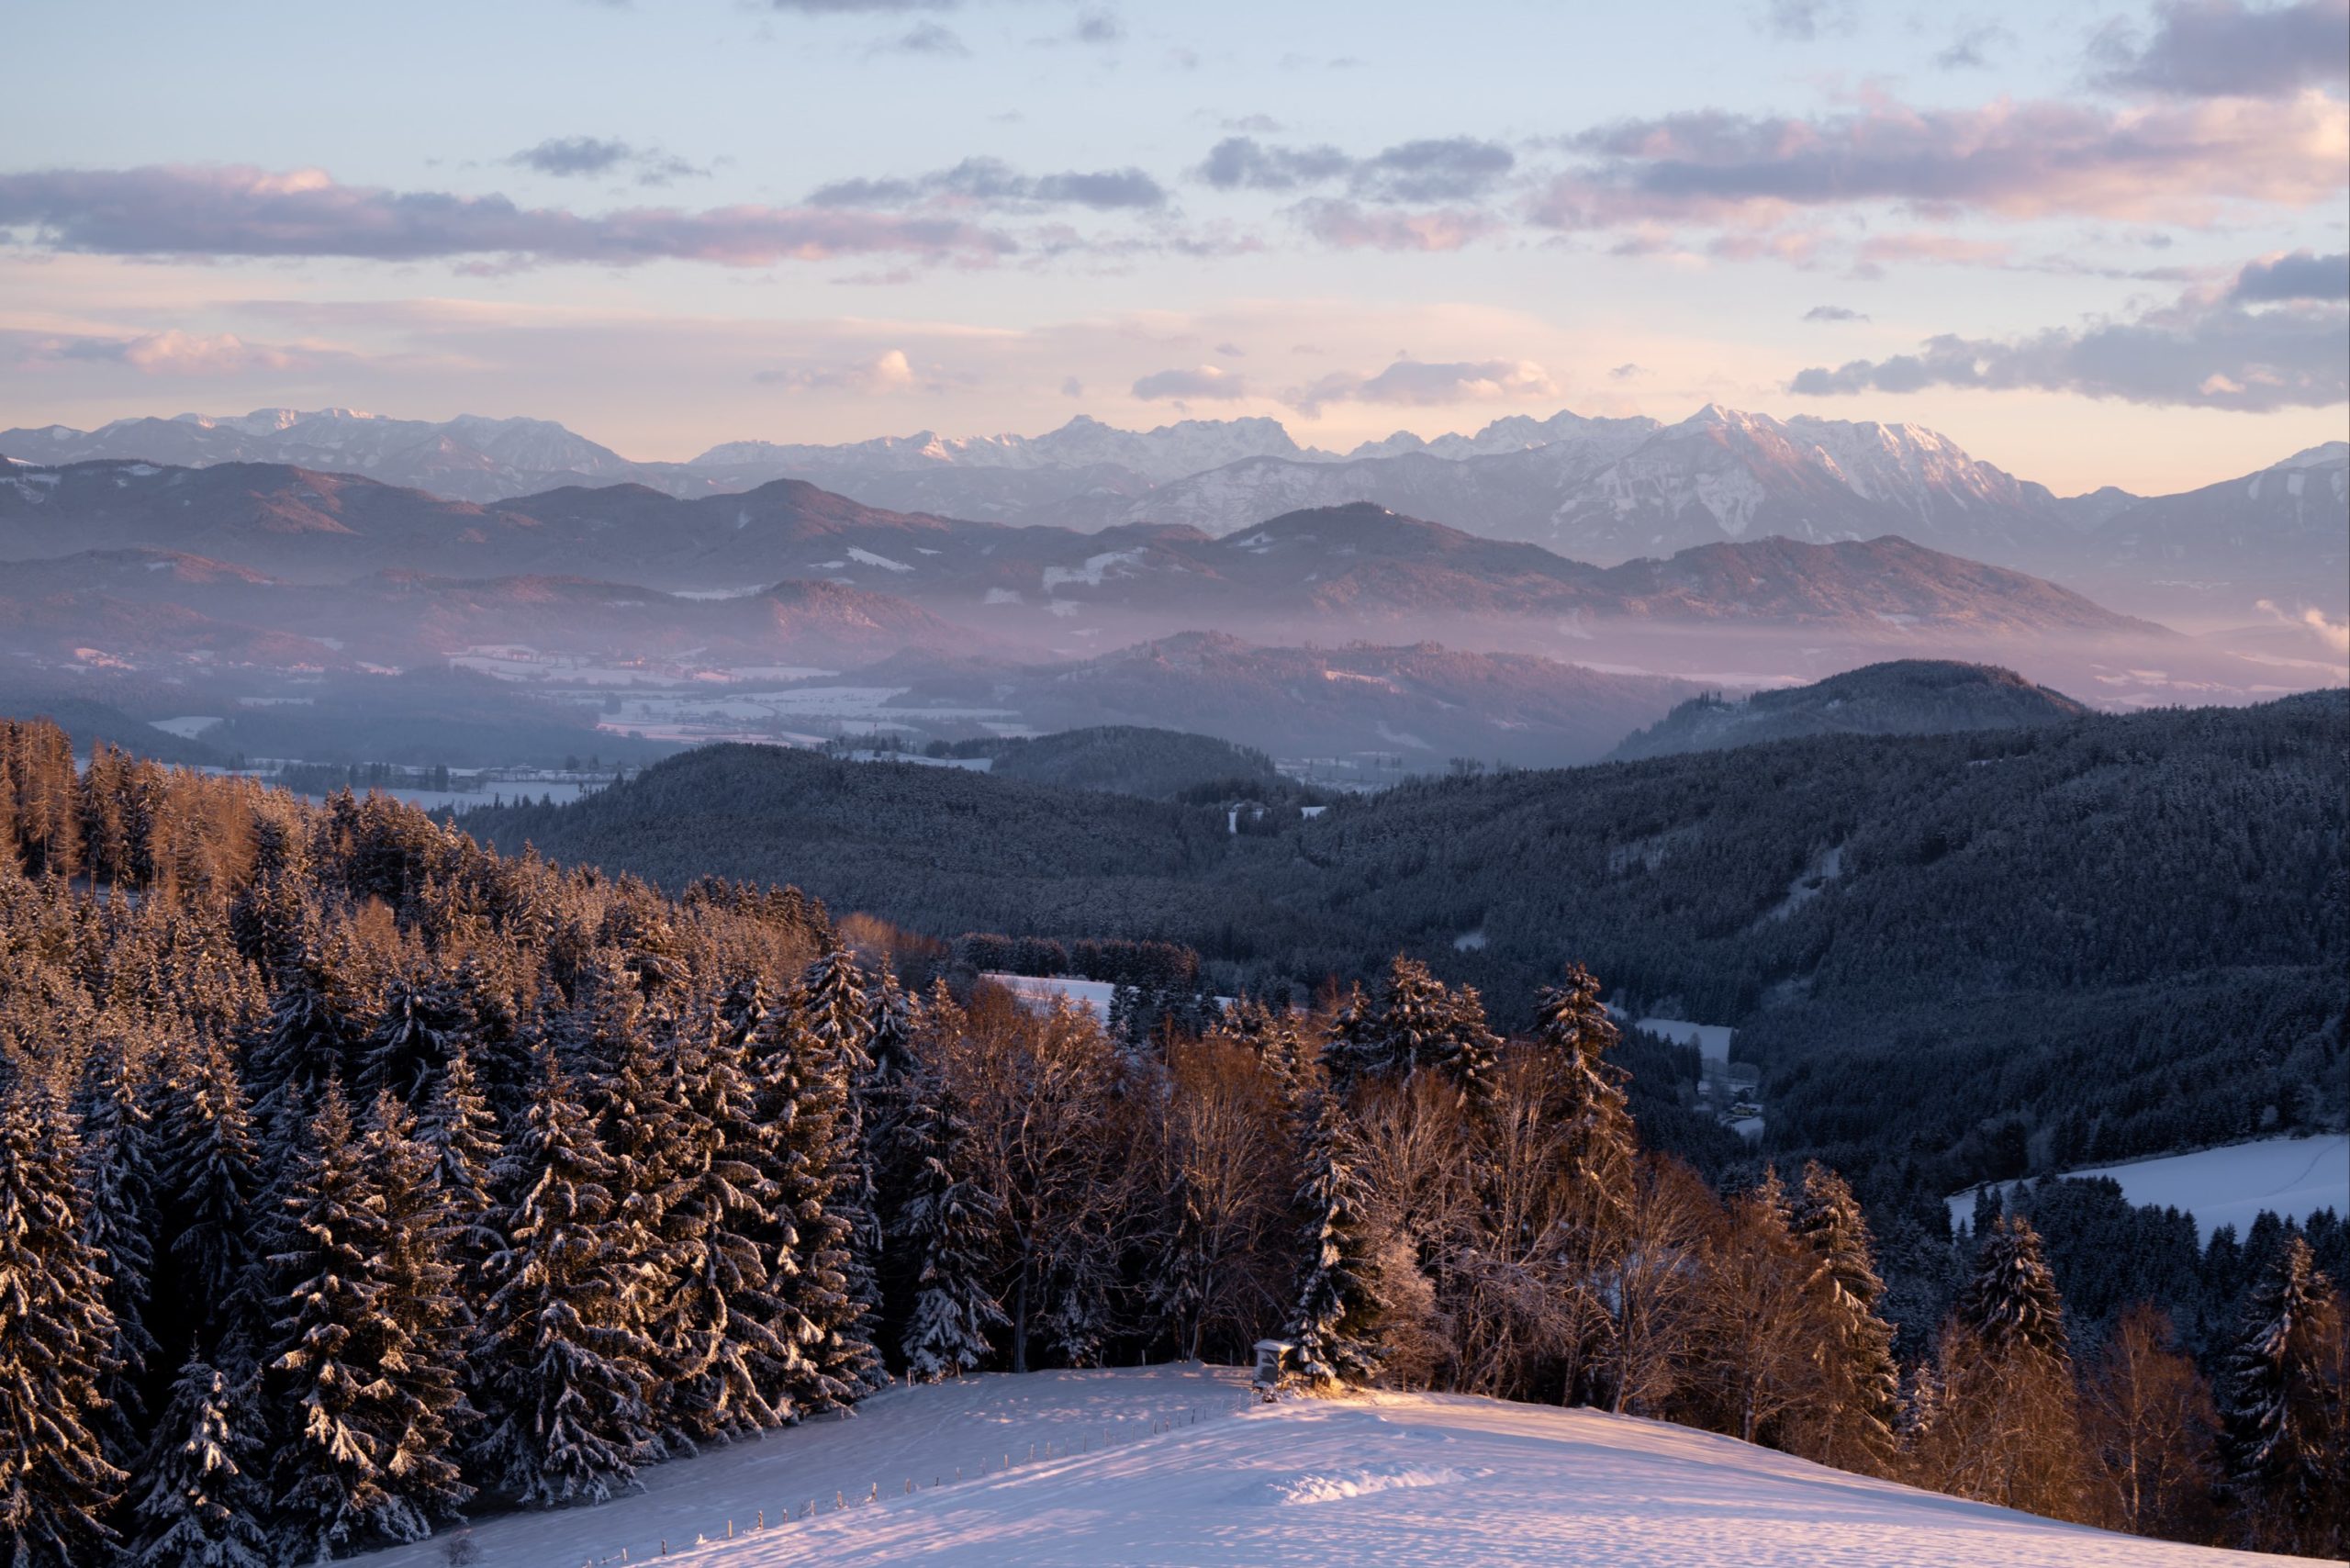 Snowy sunset over the Karawanken mountains, the border of Austria and Slovenia, from Gunzenberg, Carinthia, Austria